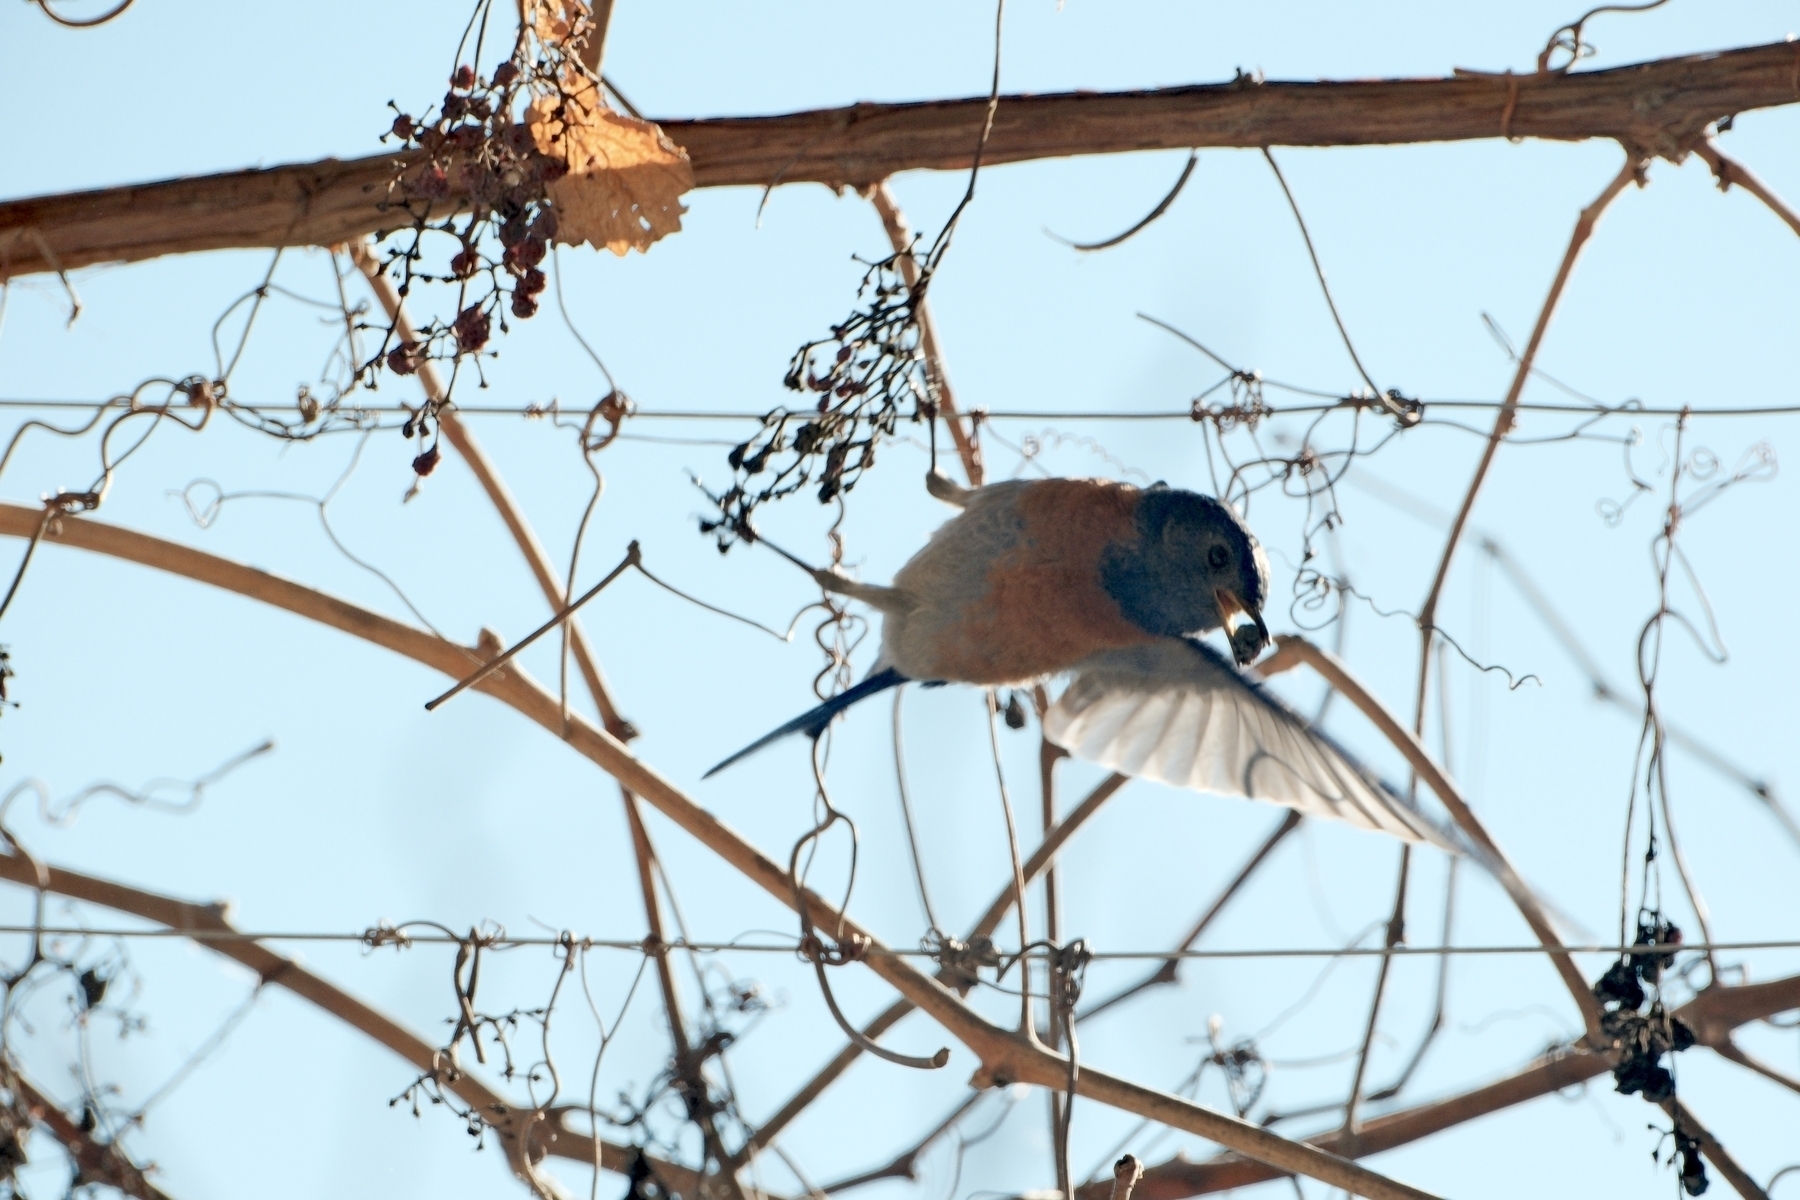 A blue bird flies away from the grape vine with a grape in its beak.